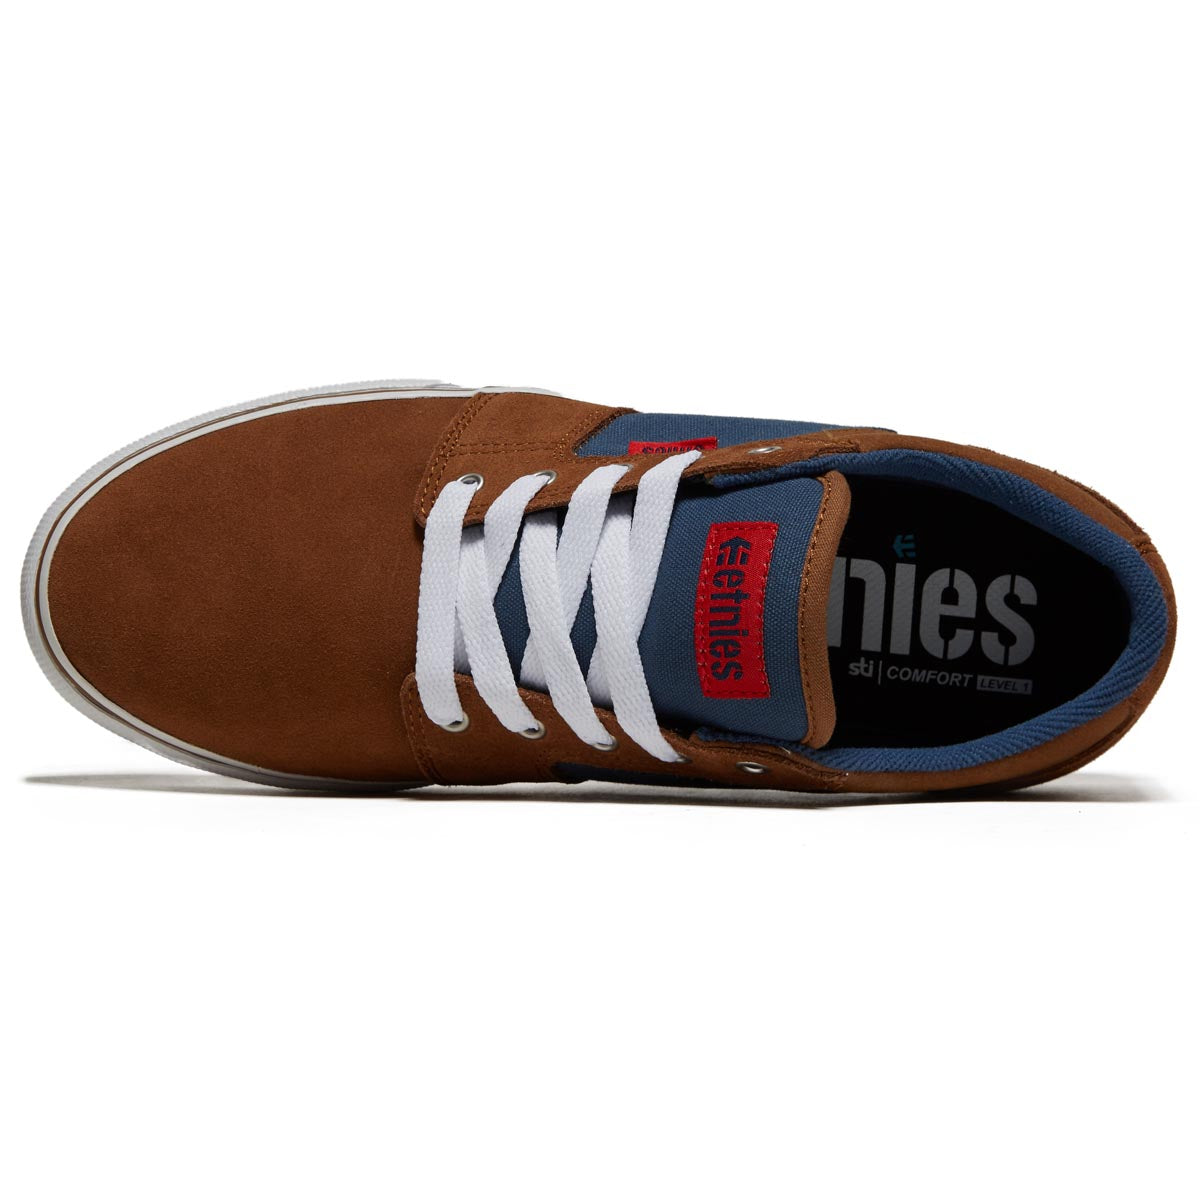 Etnies Barge Ls Shoes - Brown/Blue image 3